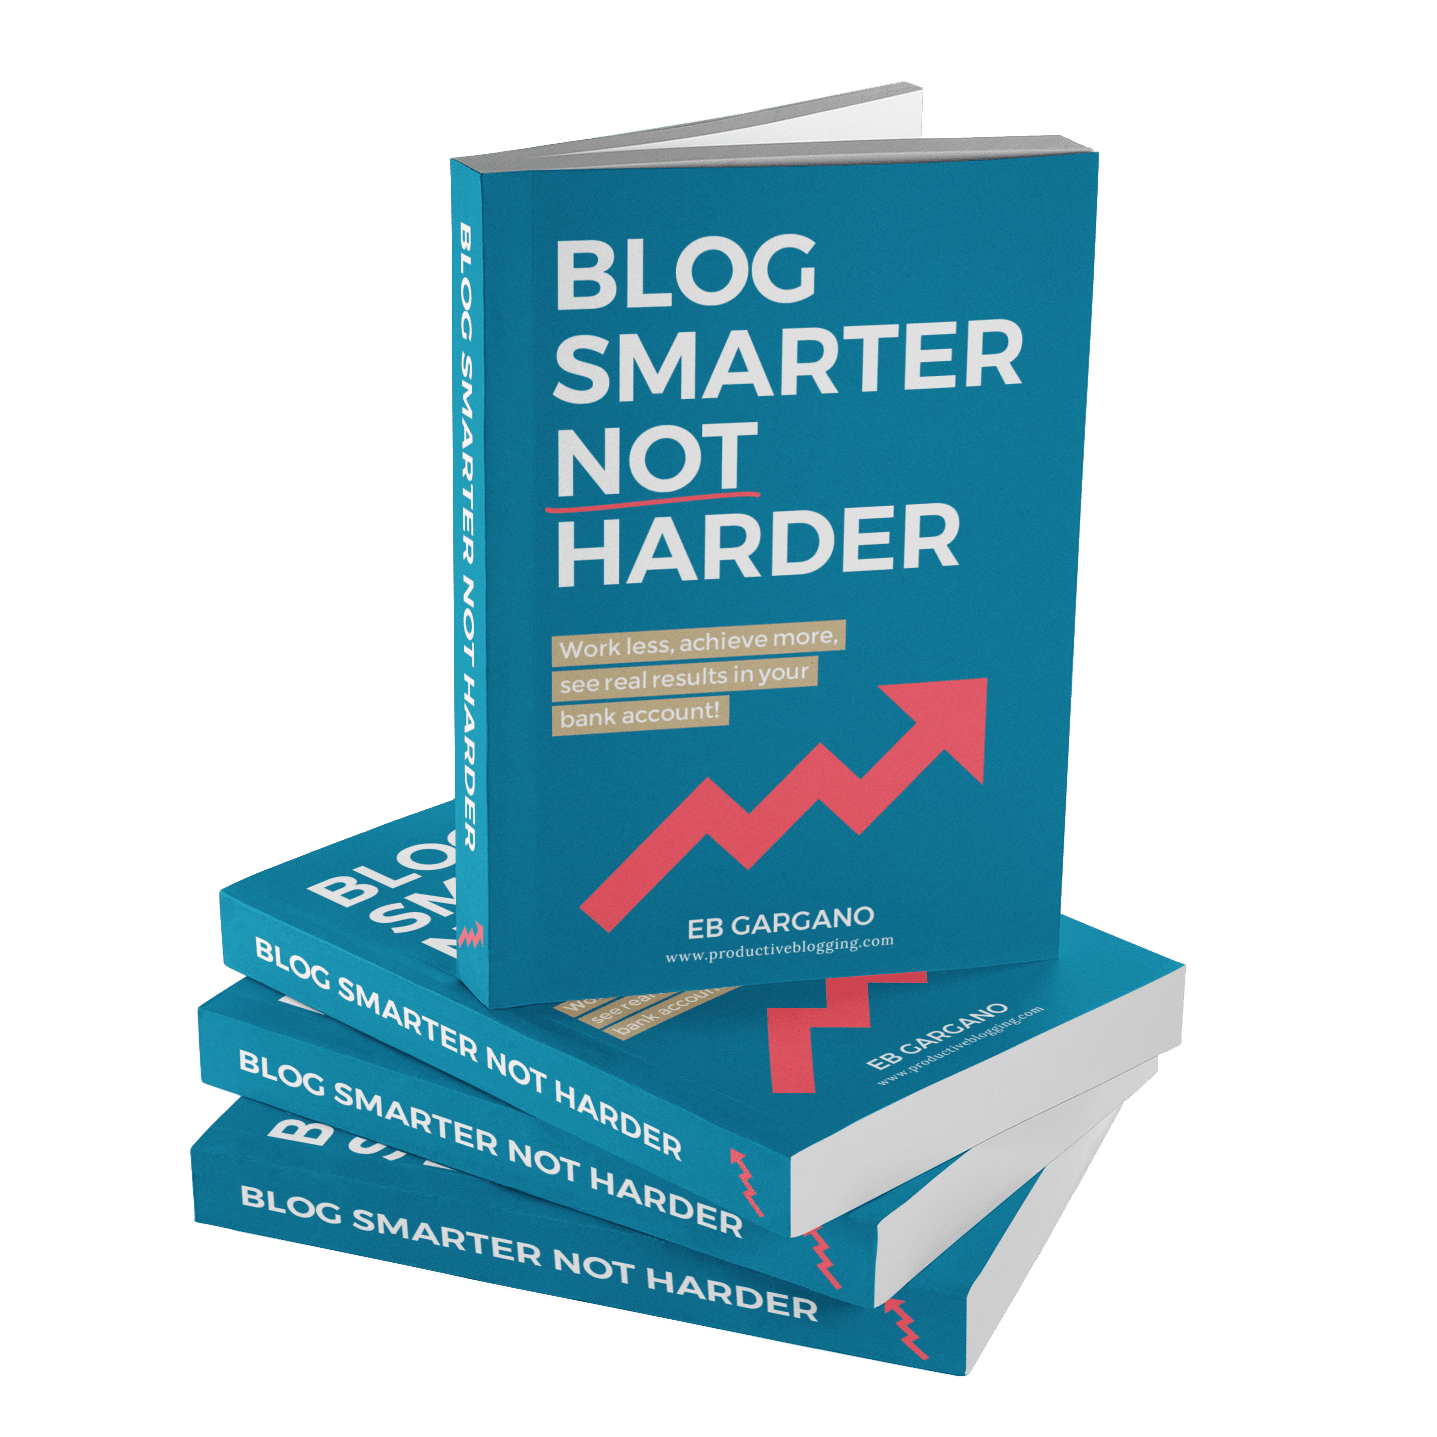 Blog Smarter Not Harder Mockup: 1 book standing on 3 books